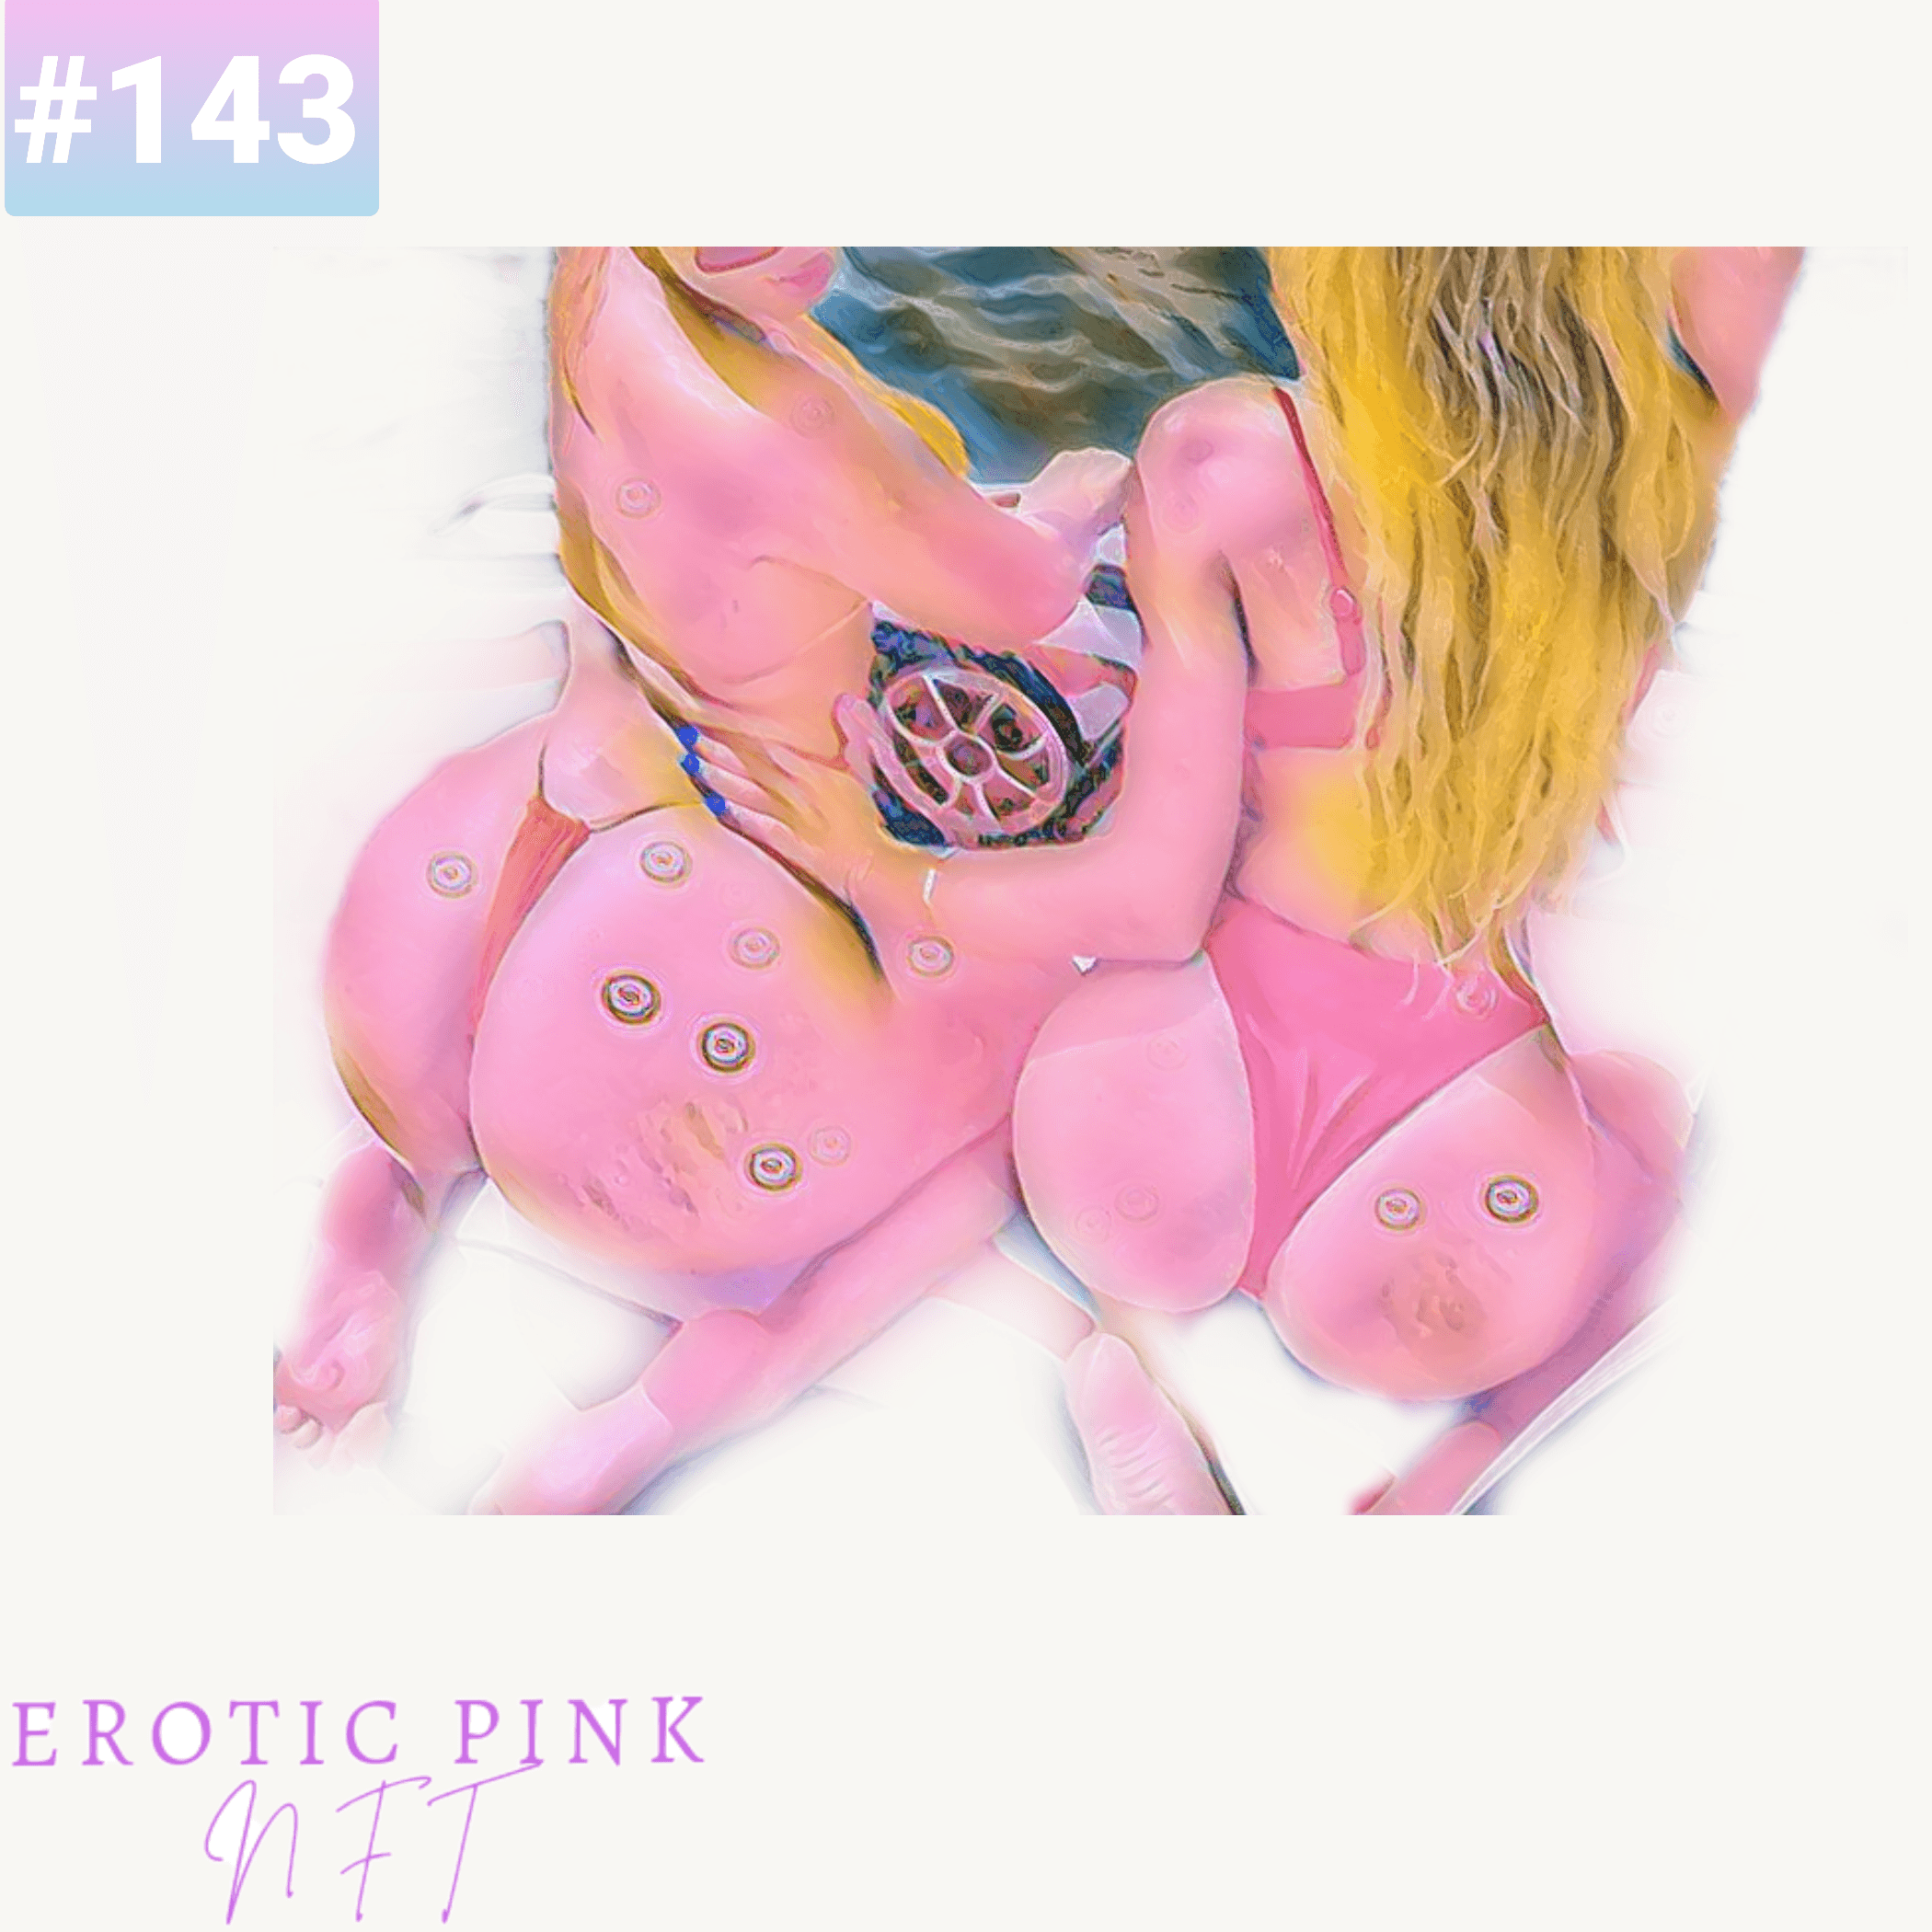 Erotic Pink #143